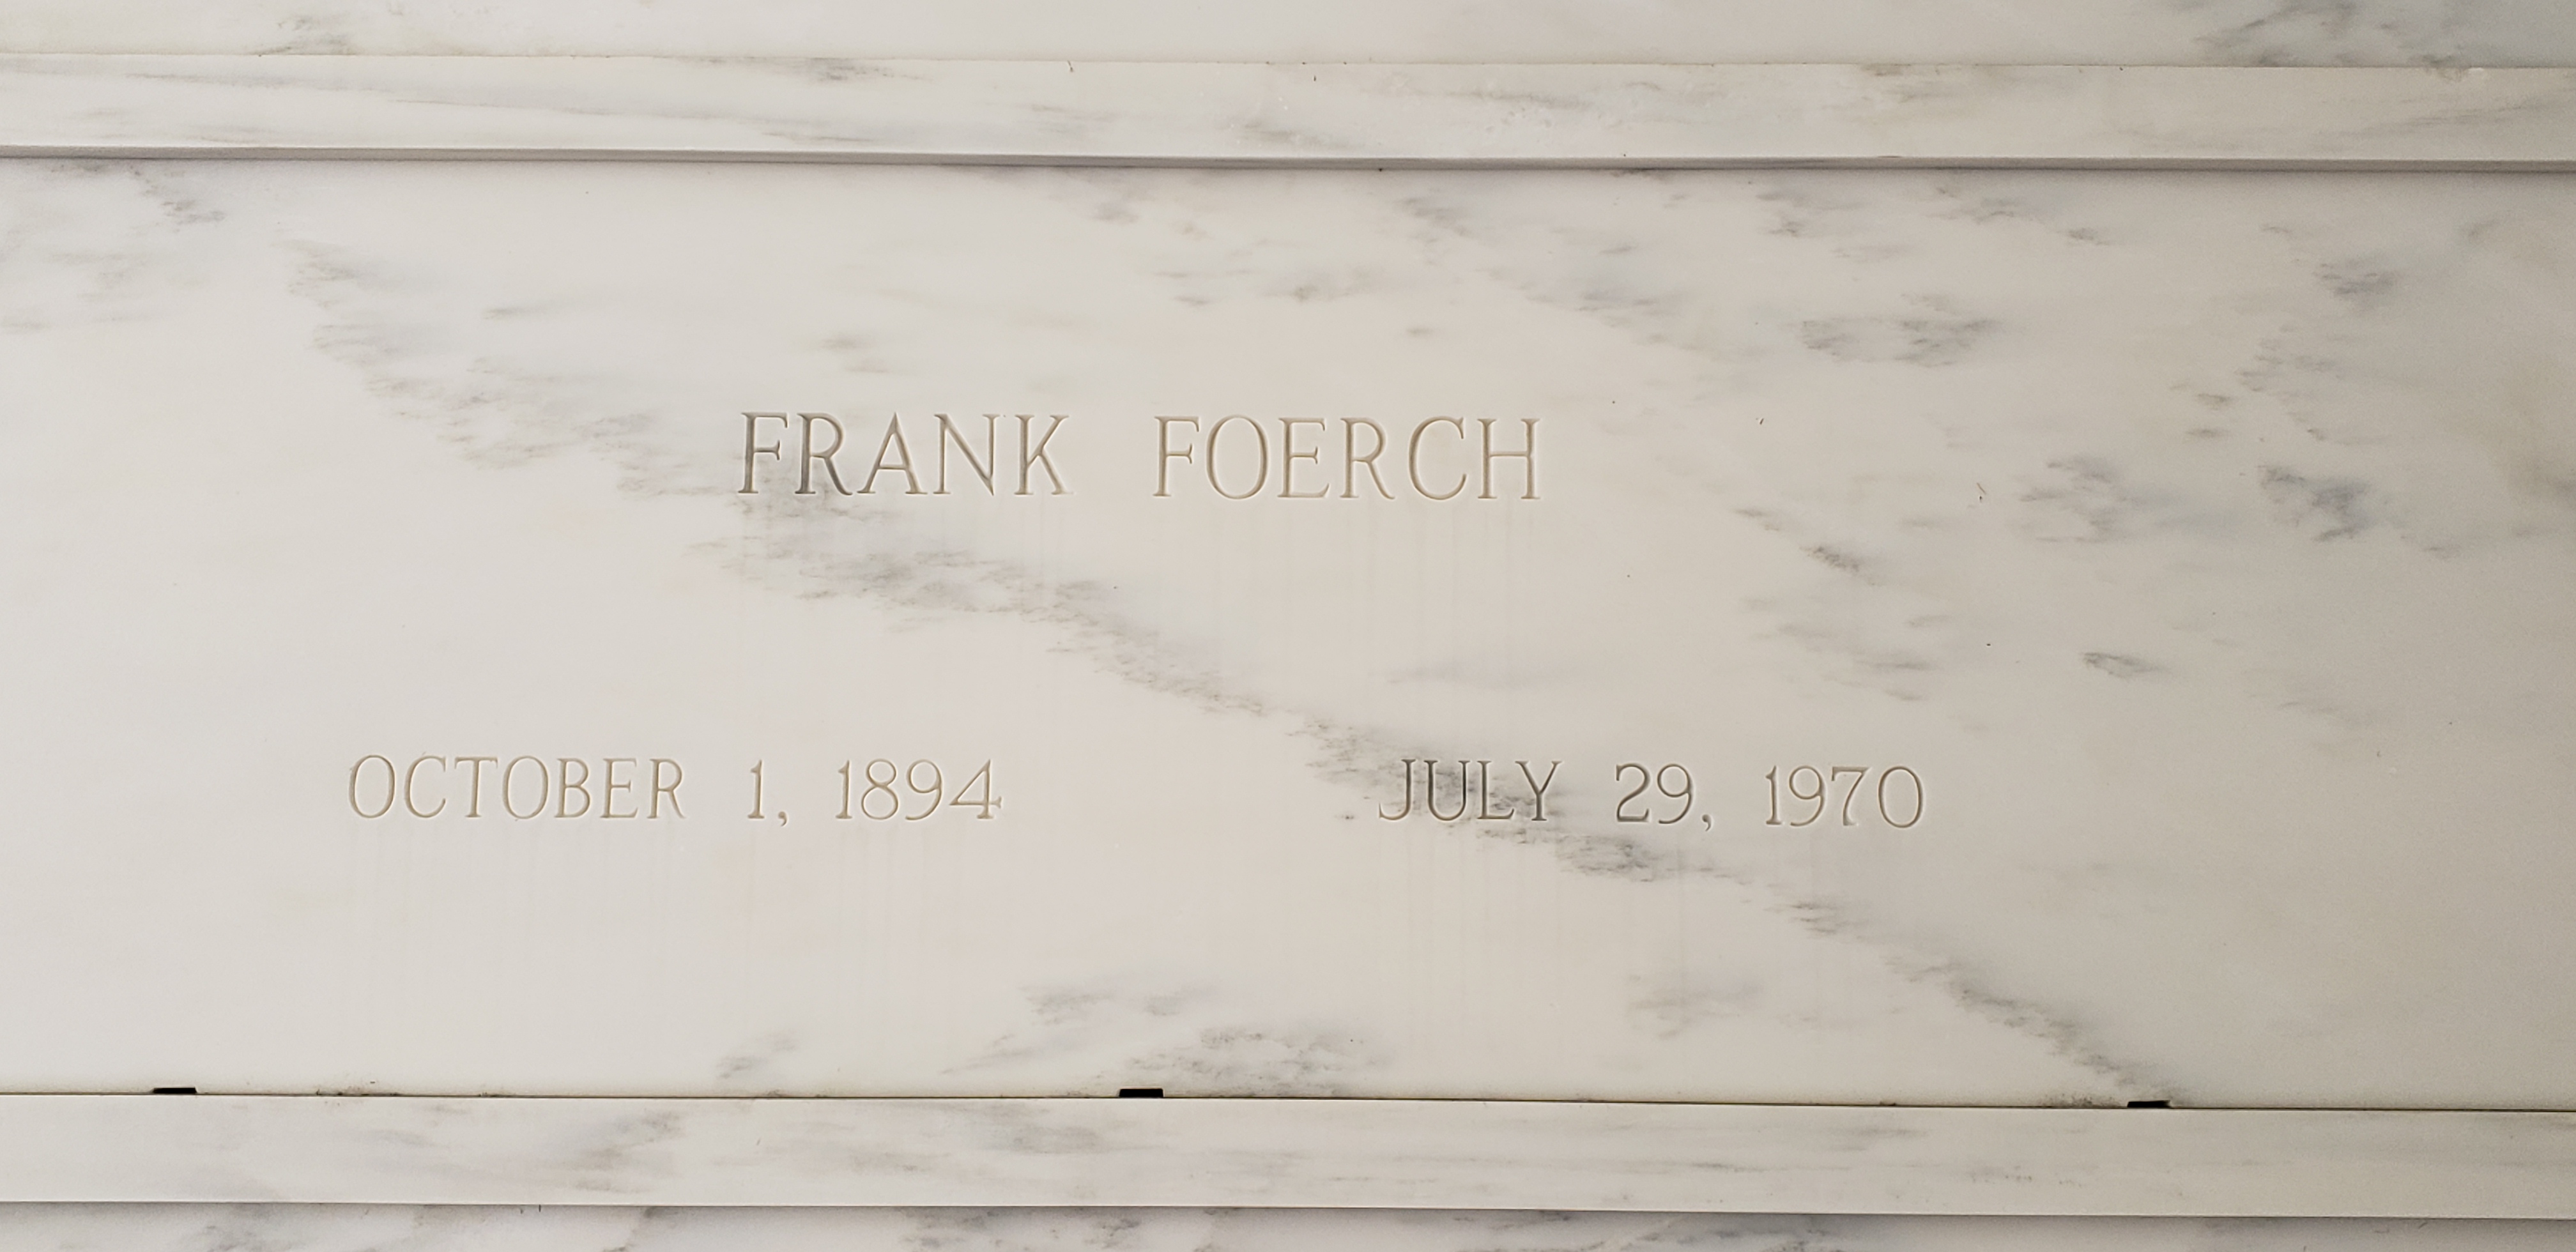 Frank Foerch